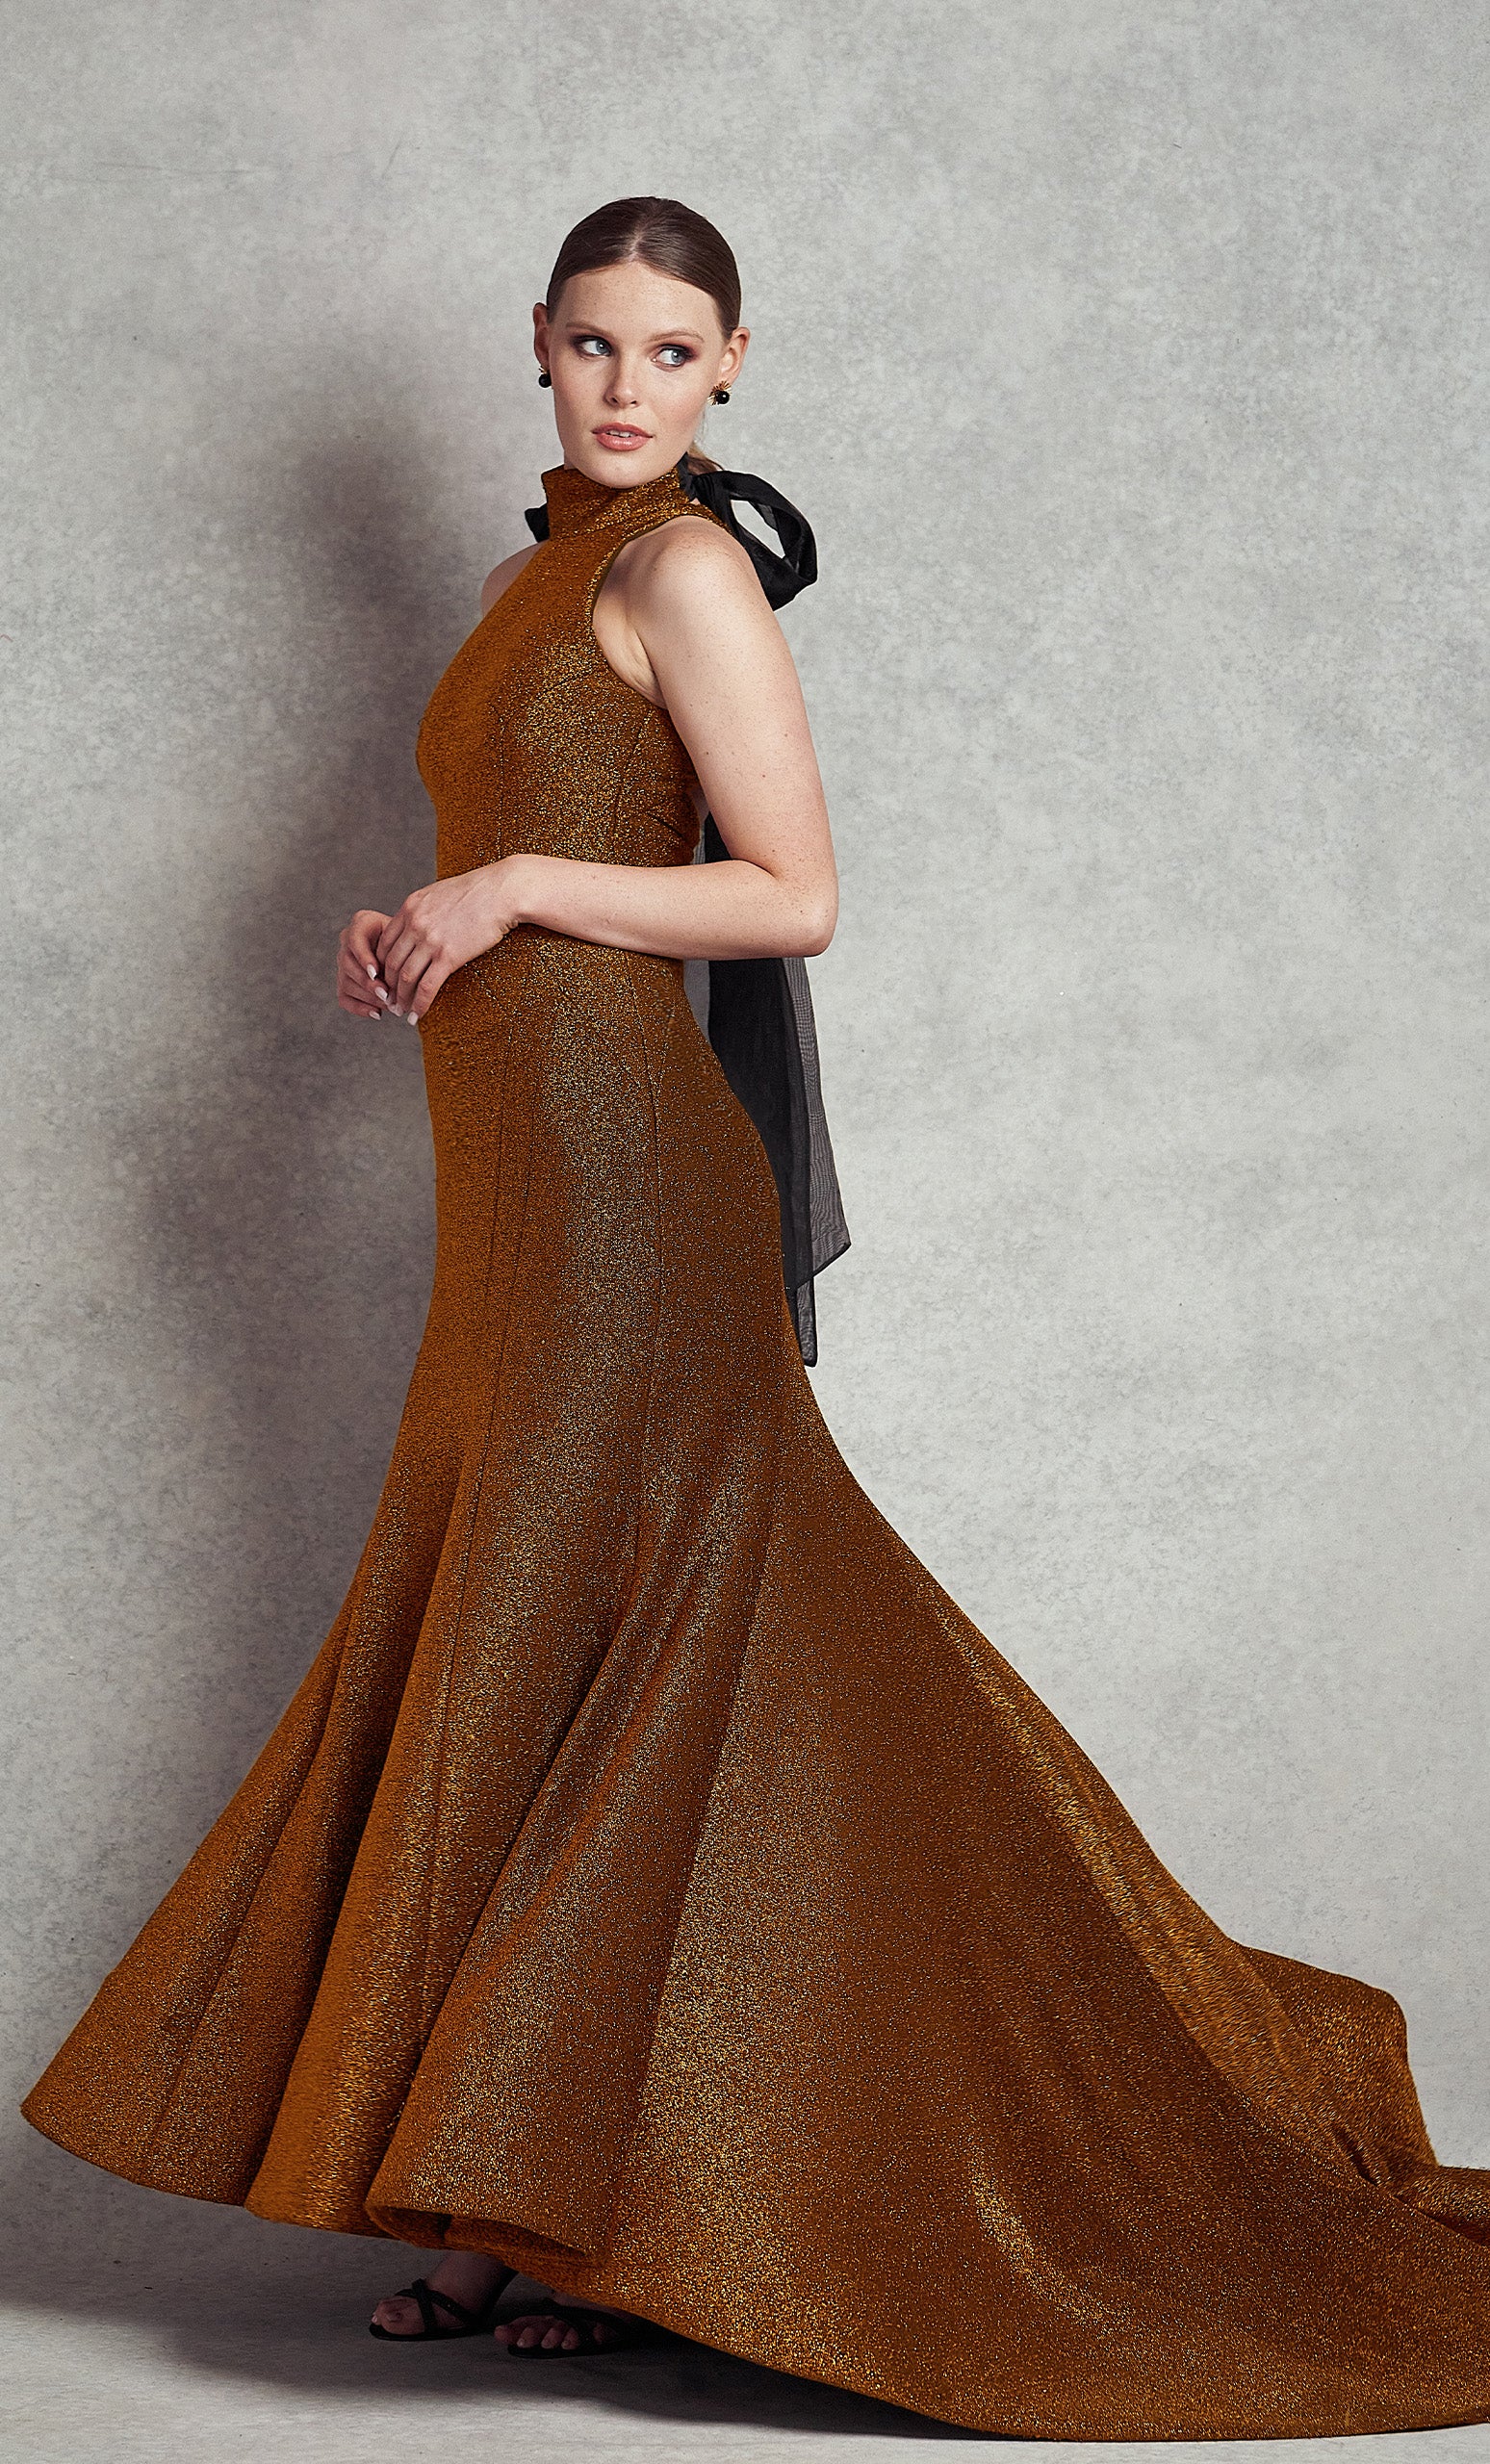 Anastasia Designer Gown Side-On